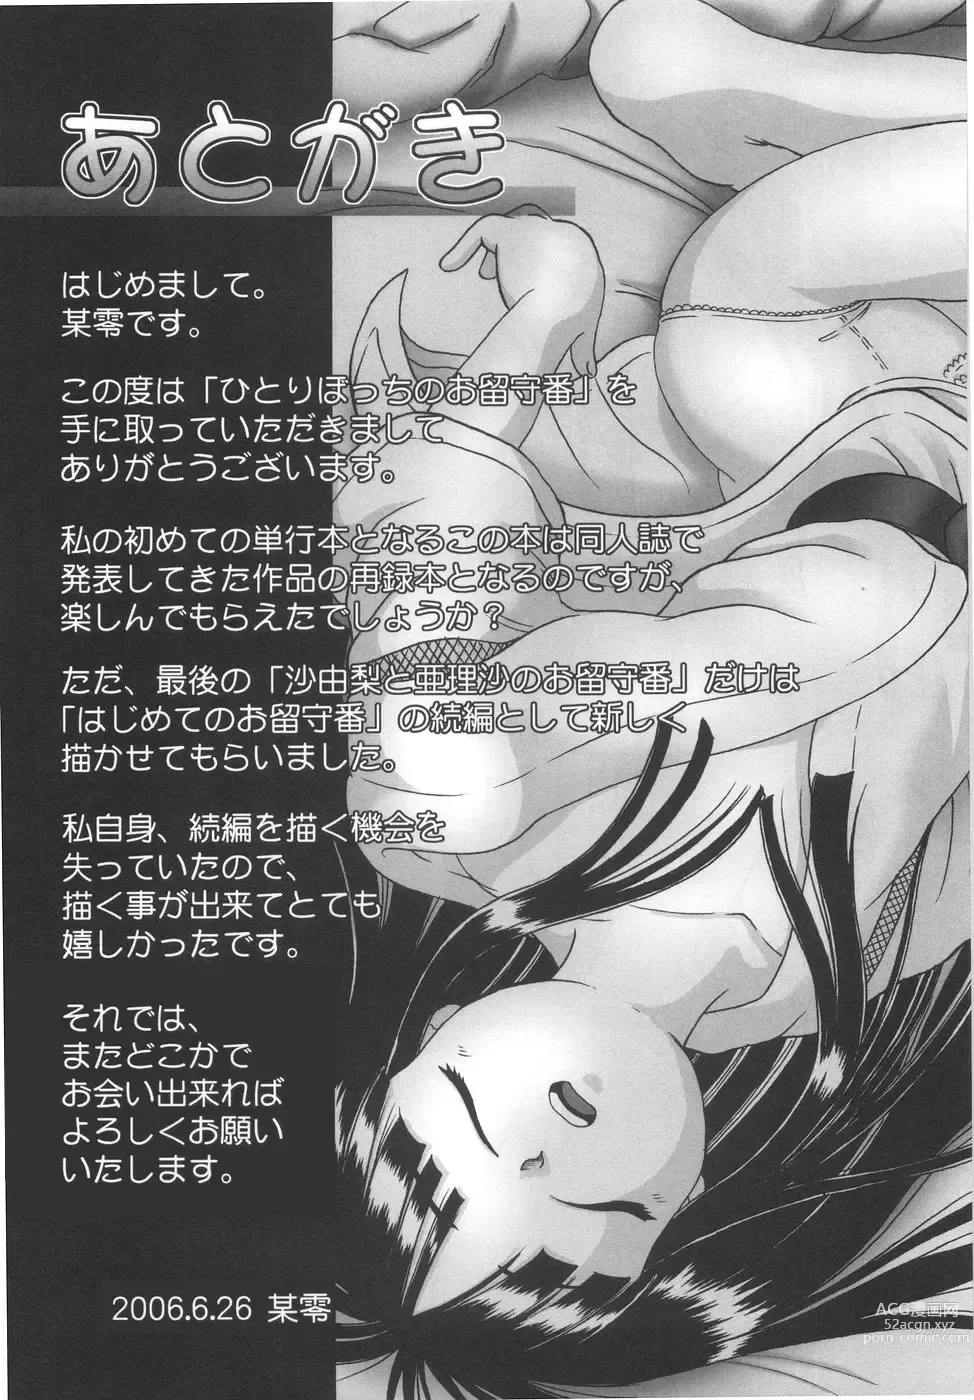 Page 233 of manga Hitoribocchi no Orusuban